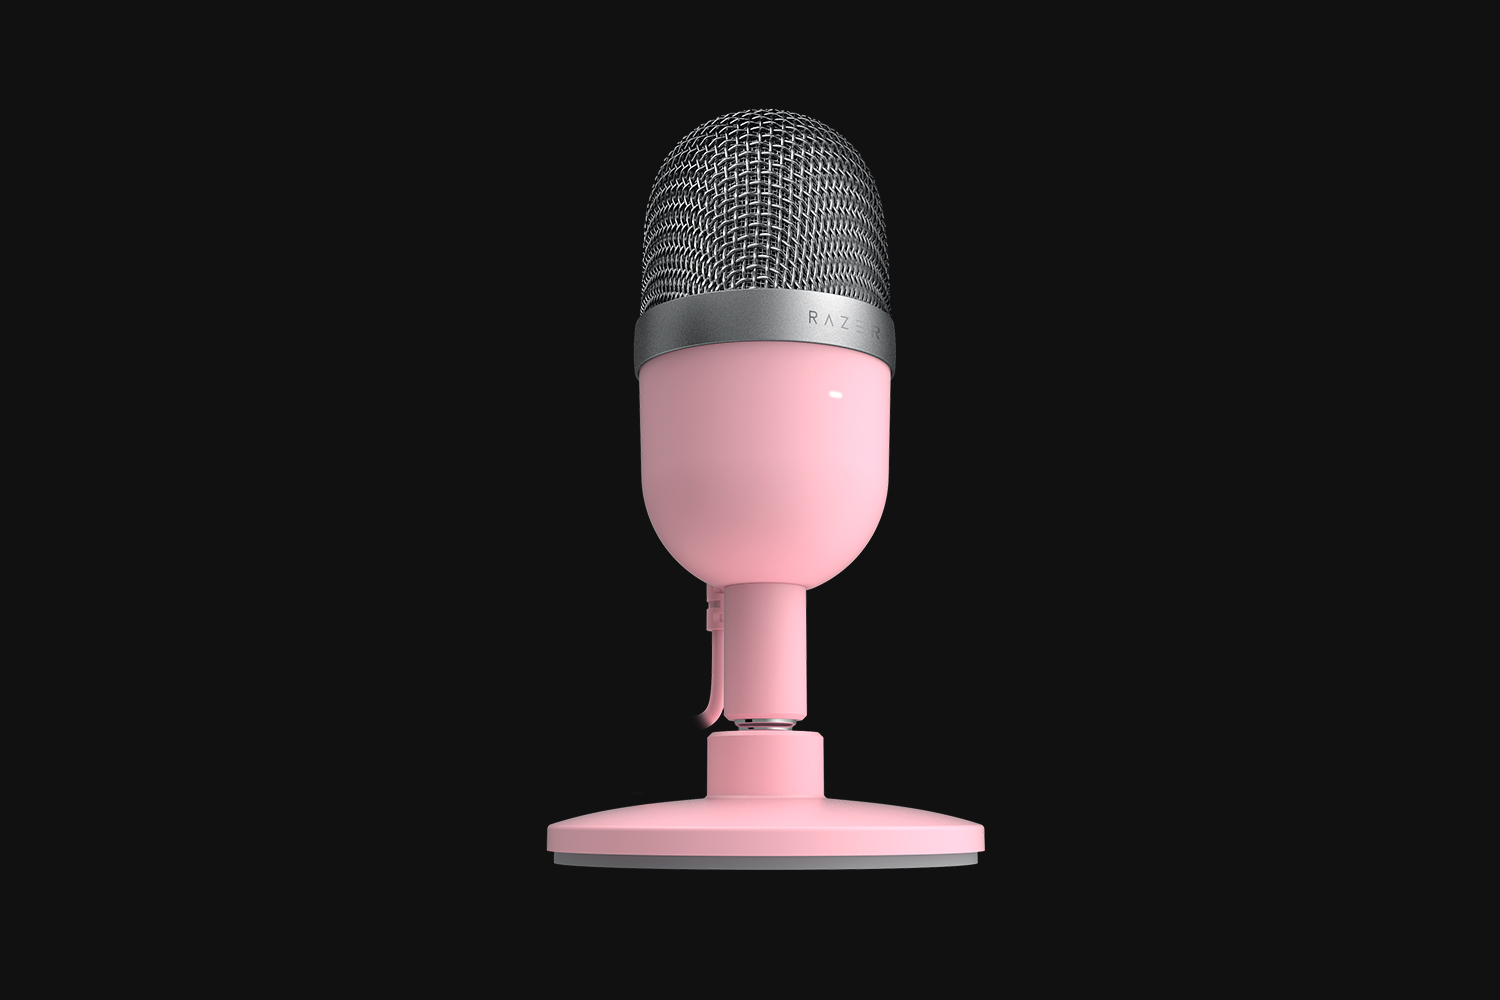 RAZER Seiren Mini Microphone – PC Central